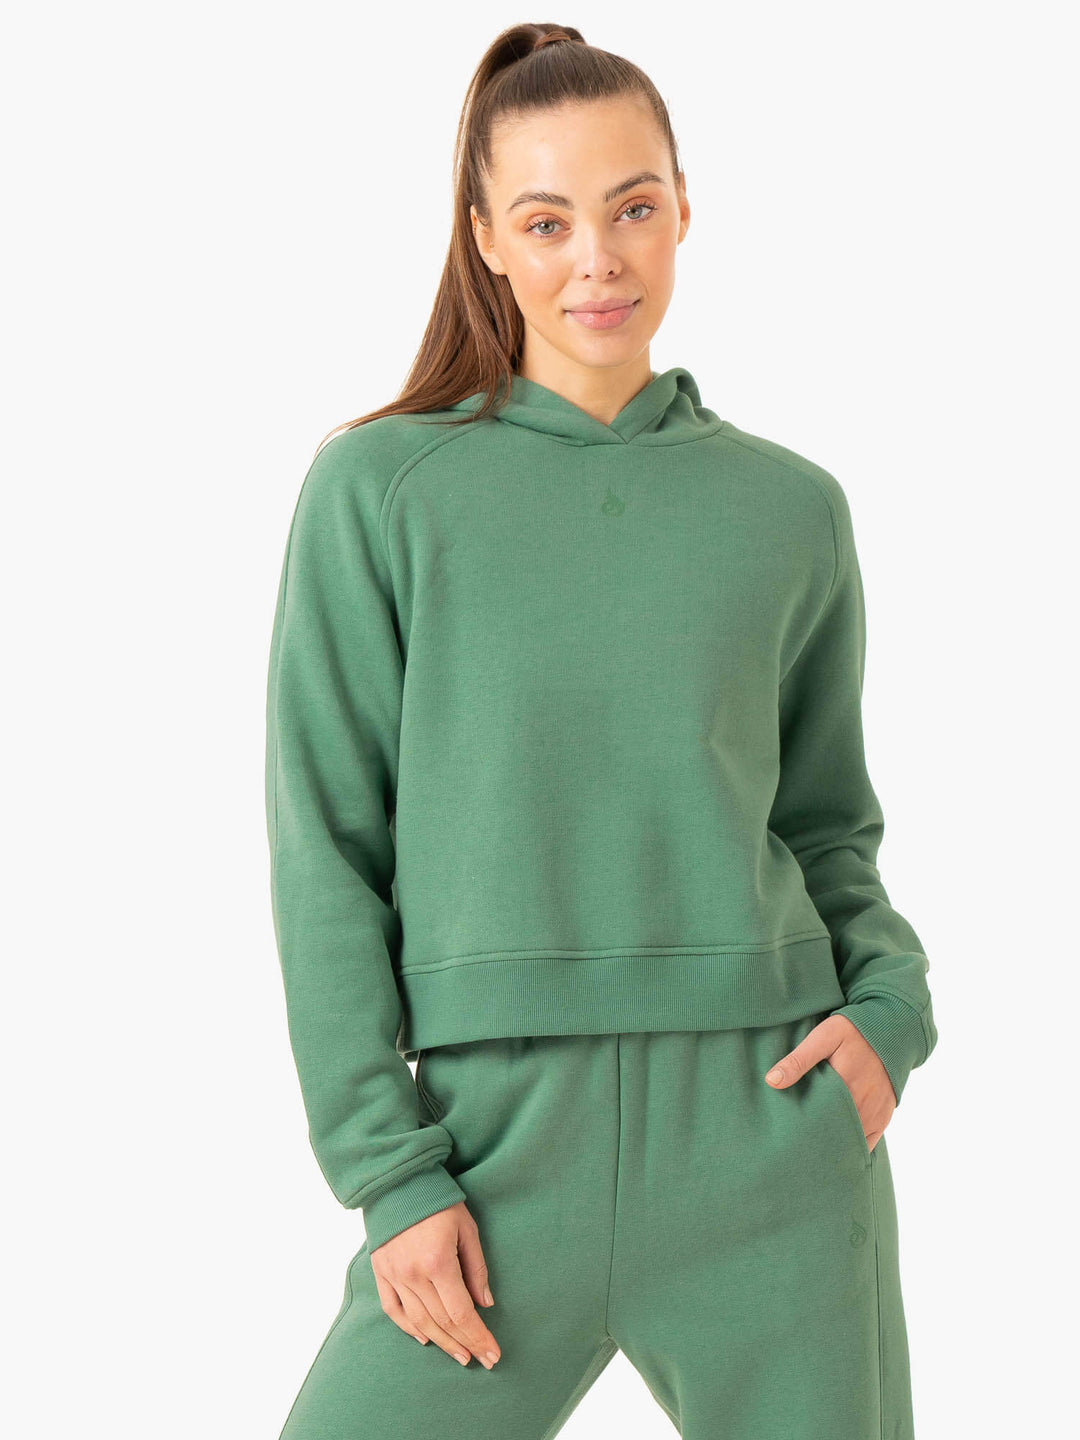 Sideline Hoodie - Forest Green Clothing Ryderwear 